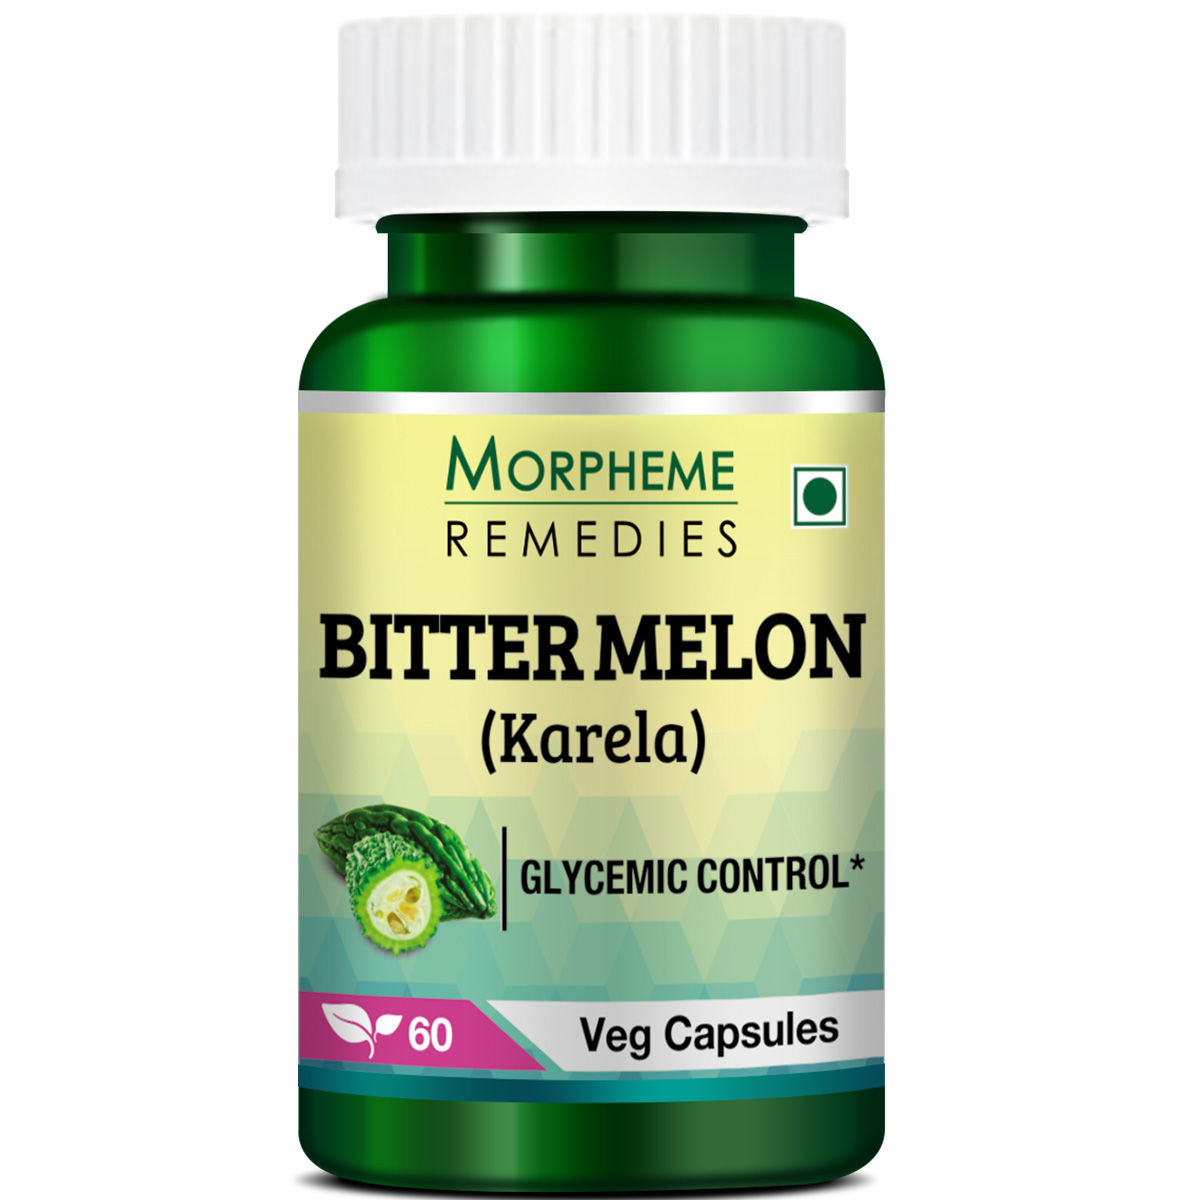 Morpheme Remedies Bittermelon (Karela) Capsules for Glycemic Control - 500mg Extract